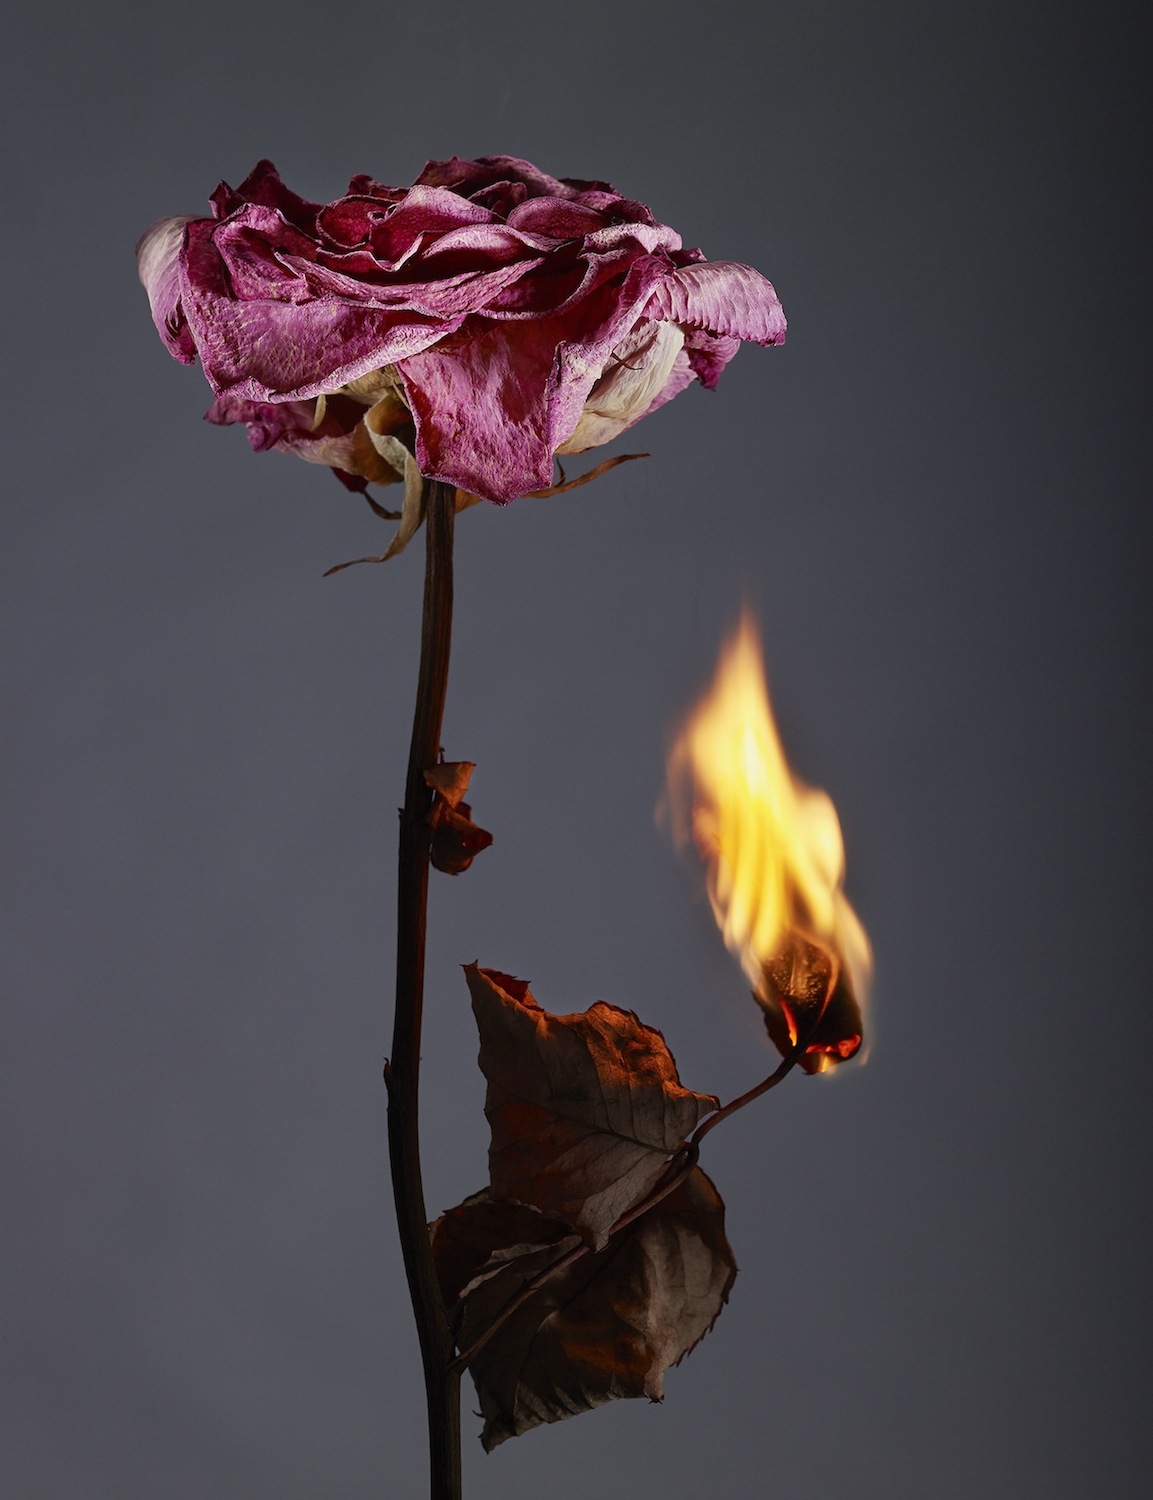 Aesthetic Burning Rose Flower Realistic Flame Effect Dark Background Stock  Photo by ©brita.seifert@googlemail.com 599407860